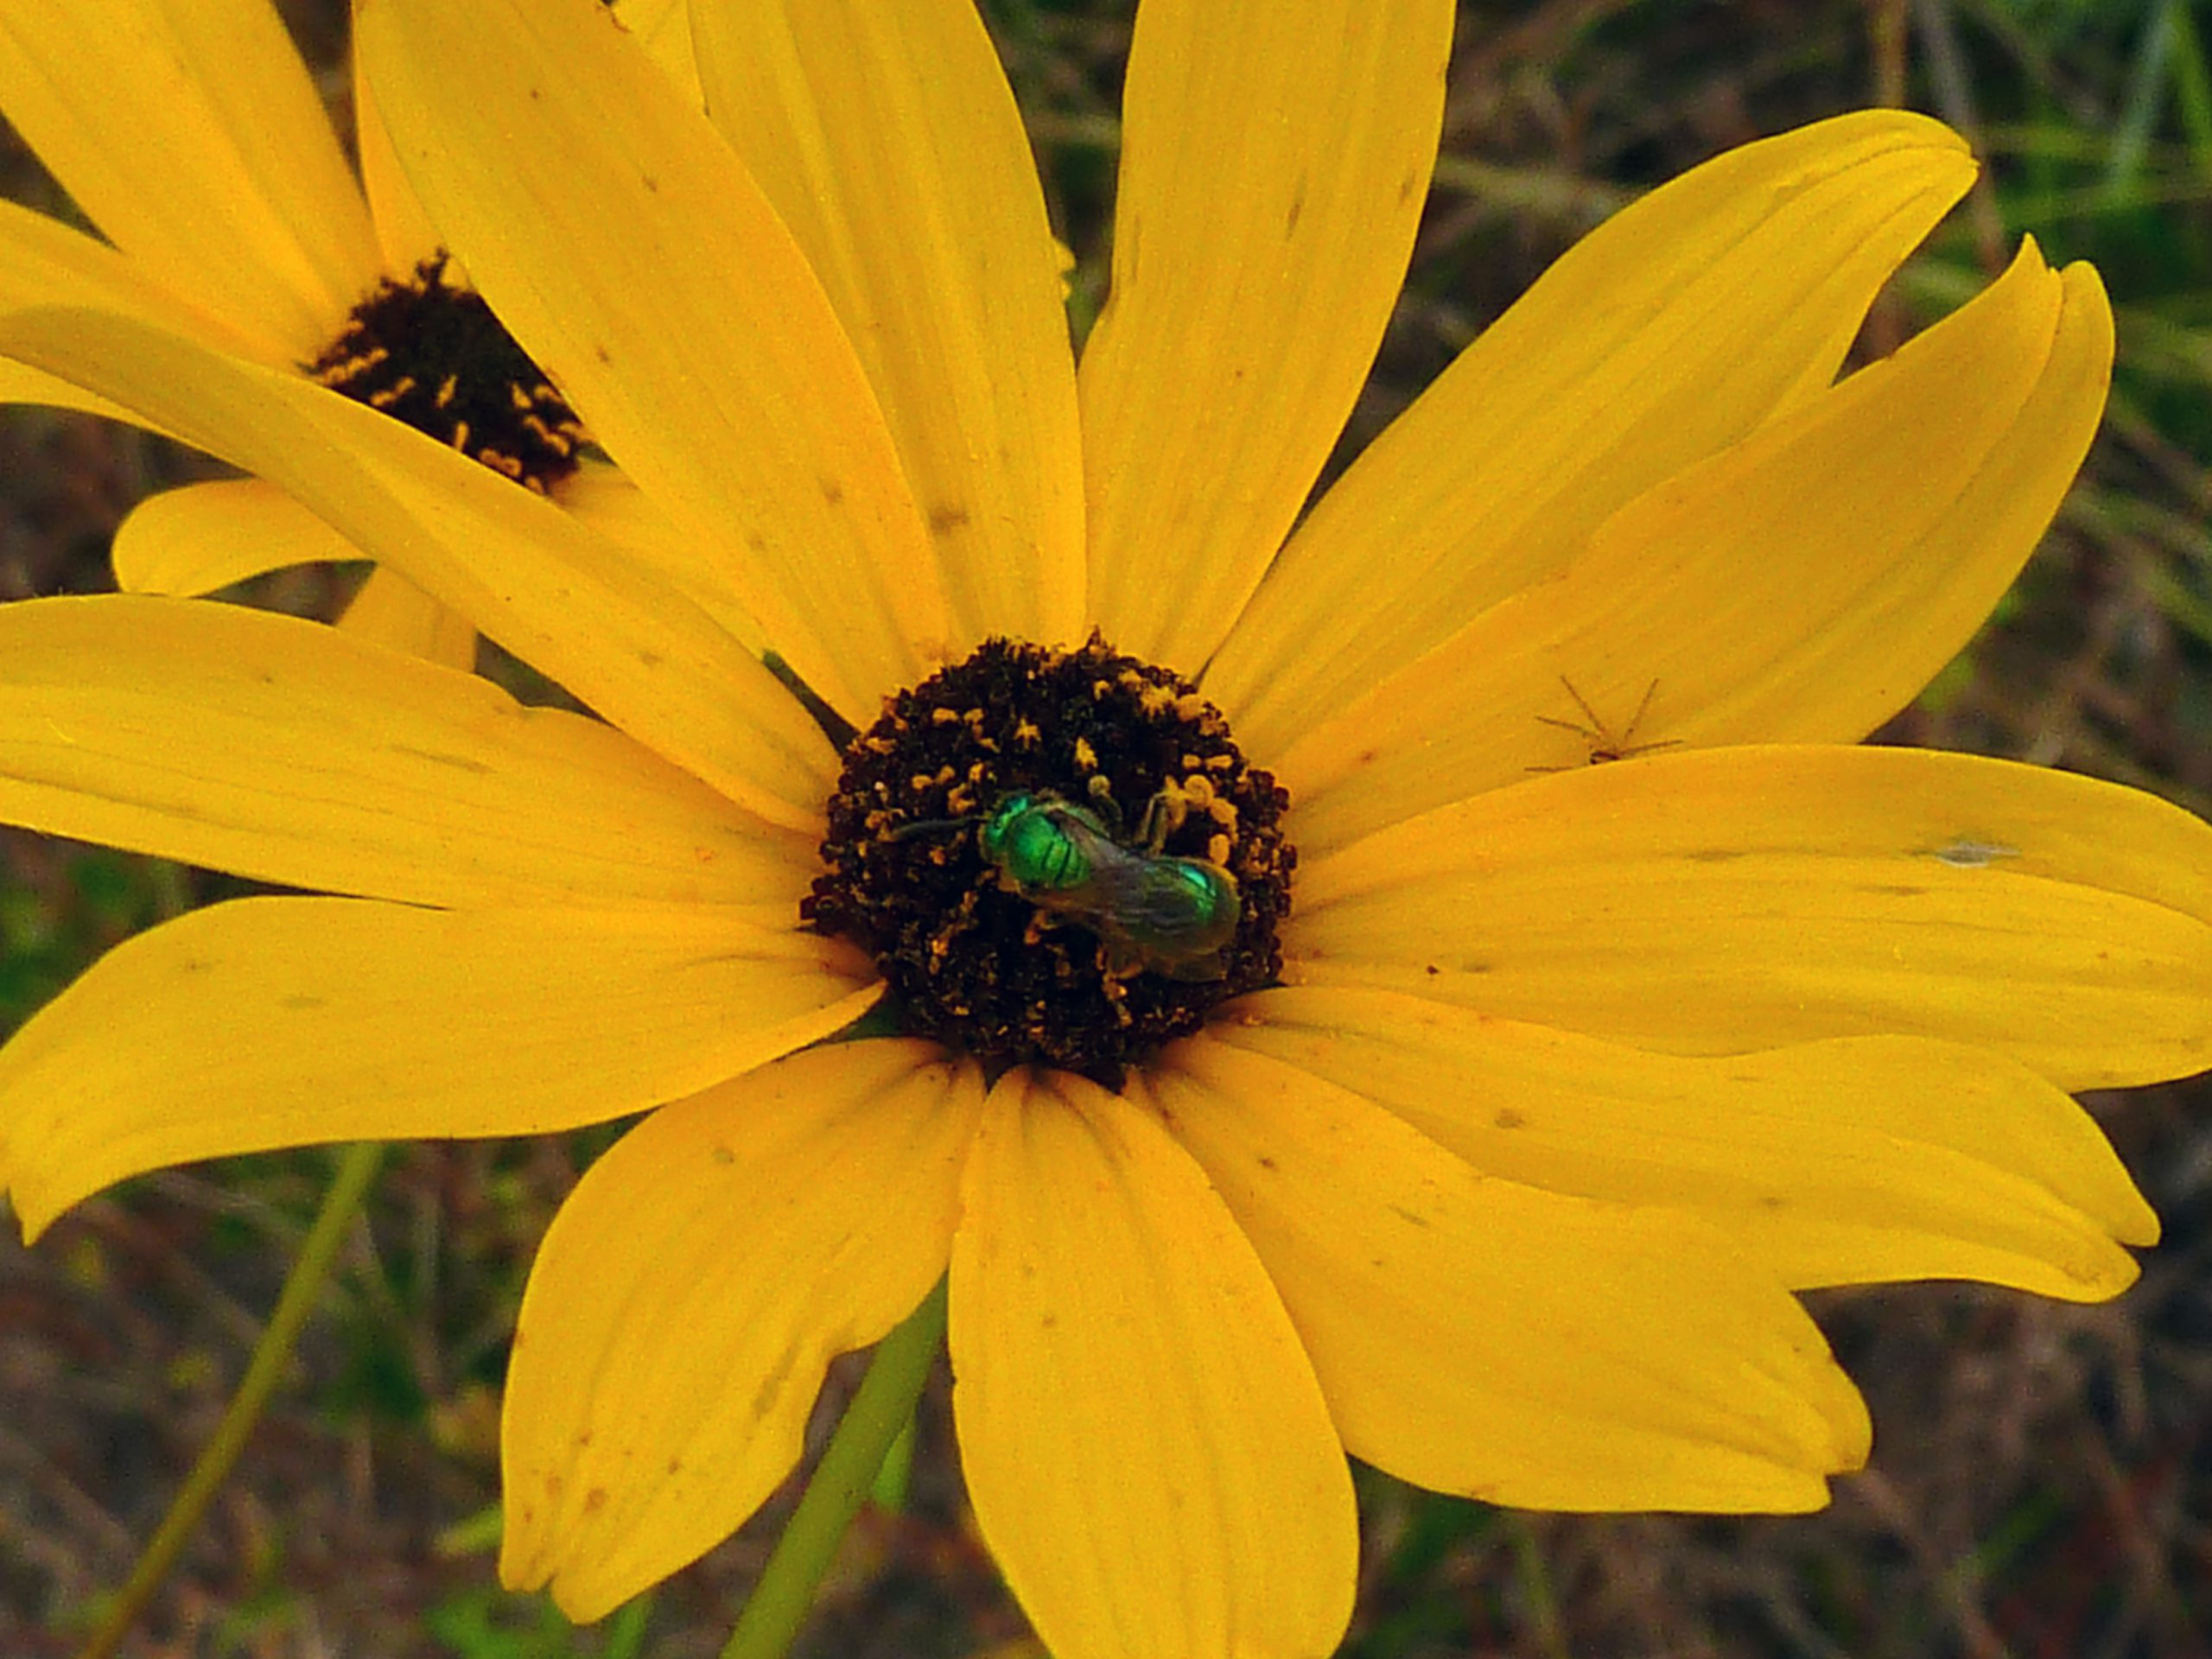 Green sweat bee on Narrowleaf sunflower, Helianthus angustifolius